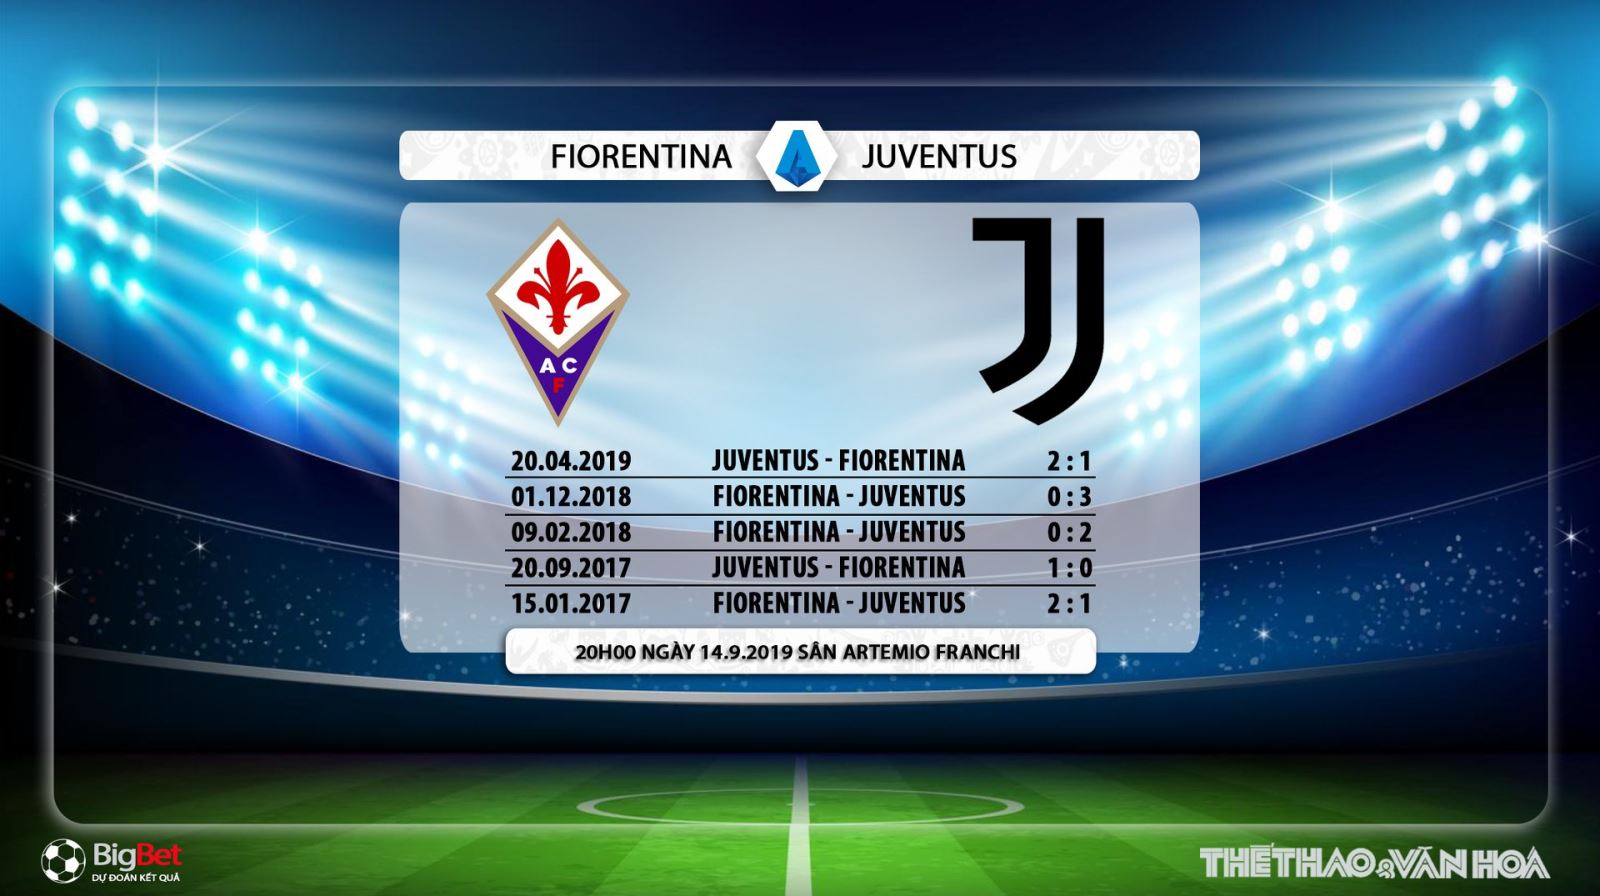 Fiorentina vs Juventus, Juventus, Fiorentina, trực tiếp bóng đá  Fiorentina vs Juventus, soi kèo  Fiorentina vs Juventus, lịch thi đấu của Juventus, xem trực tiếp bóng đá, serie a, bong da, bóng đá